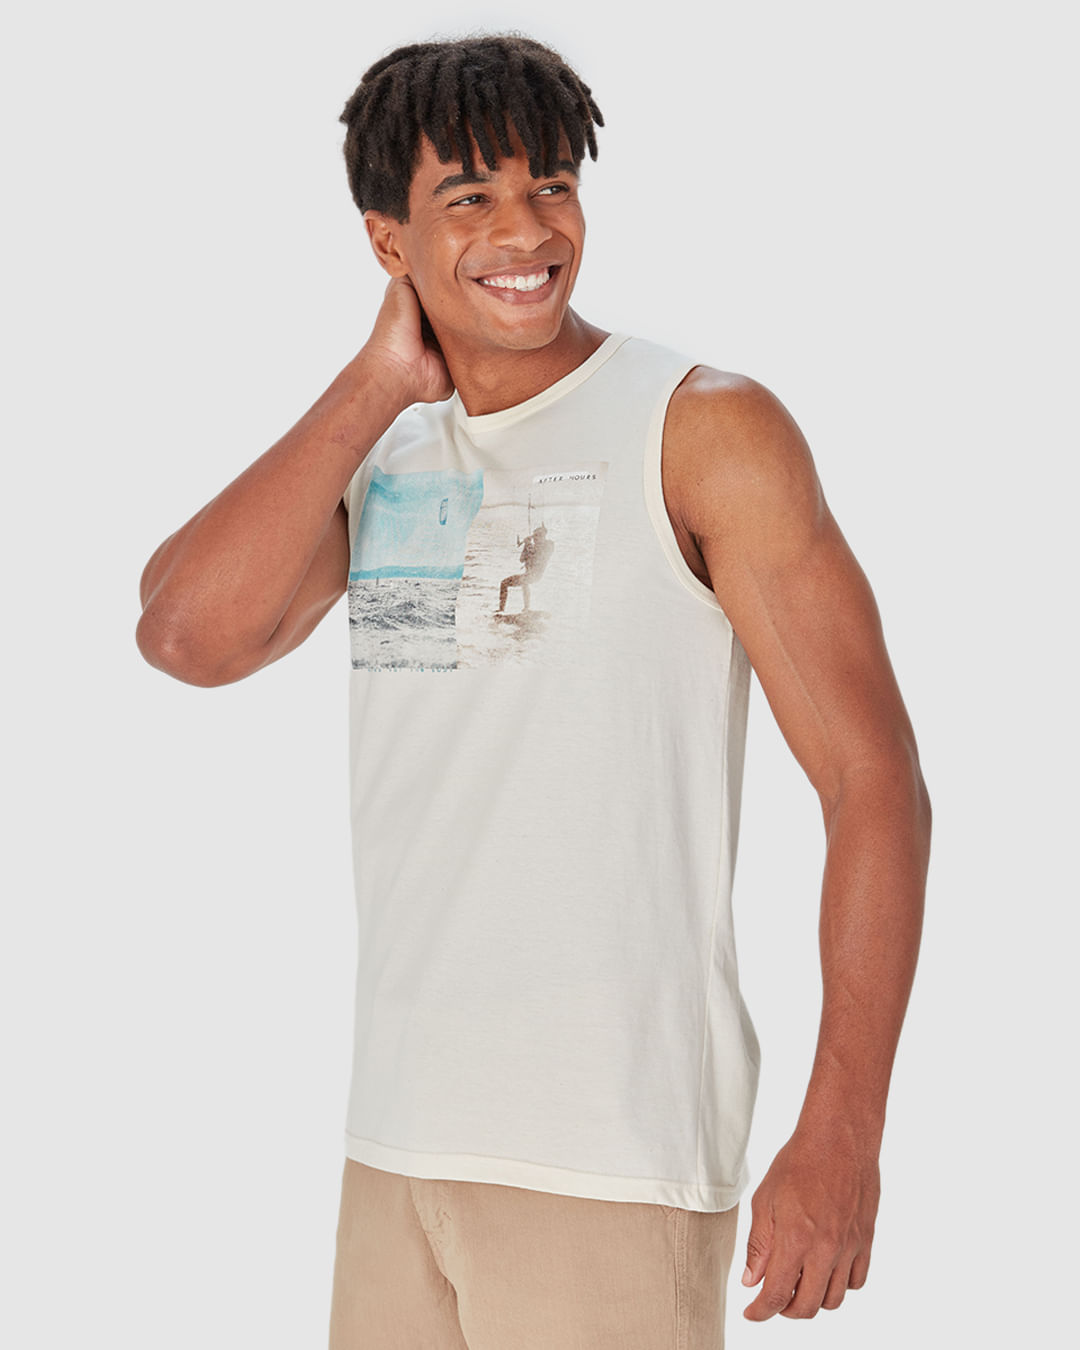 Pin de Onze em estilo&acessorios  Camisas masculinas, Camiseta